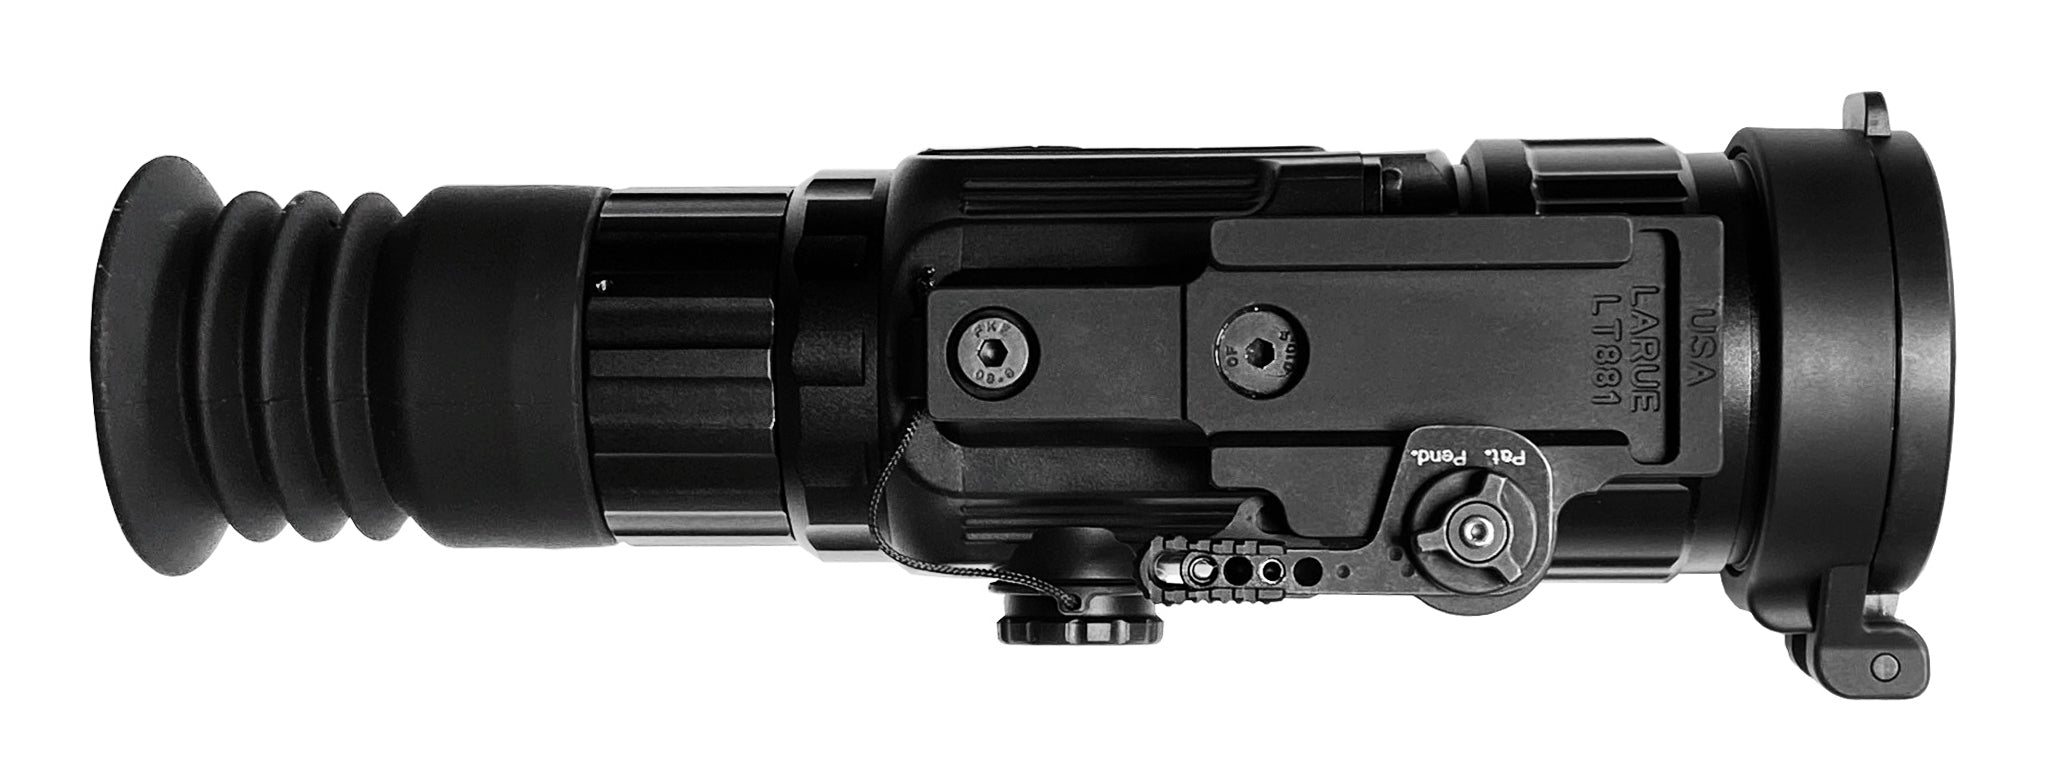 Bering Optics Super Yoter R 3.0-12.0x 50mm Thermal Rifle Scope